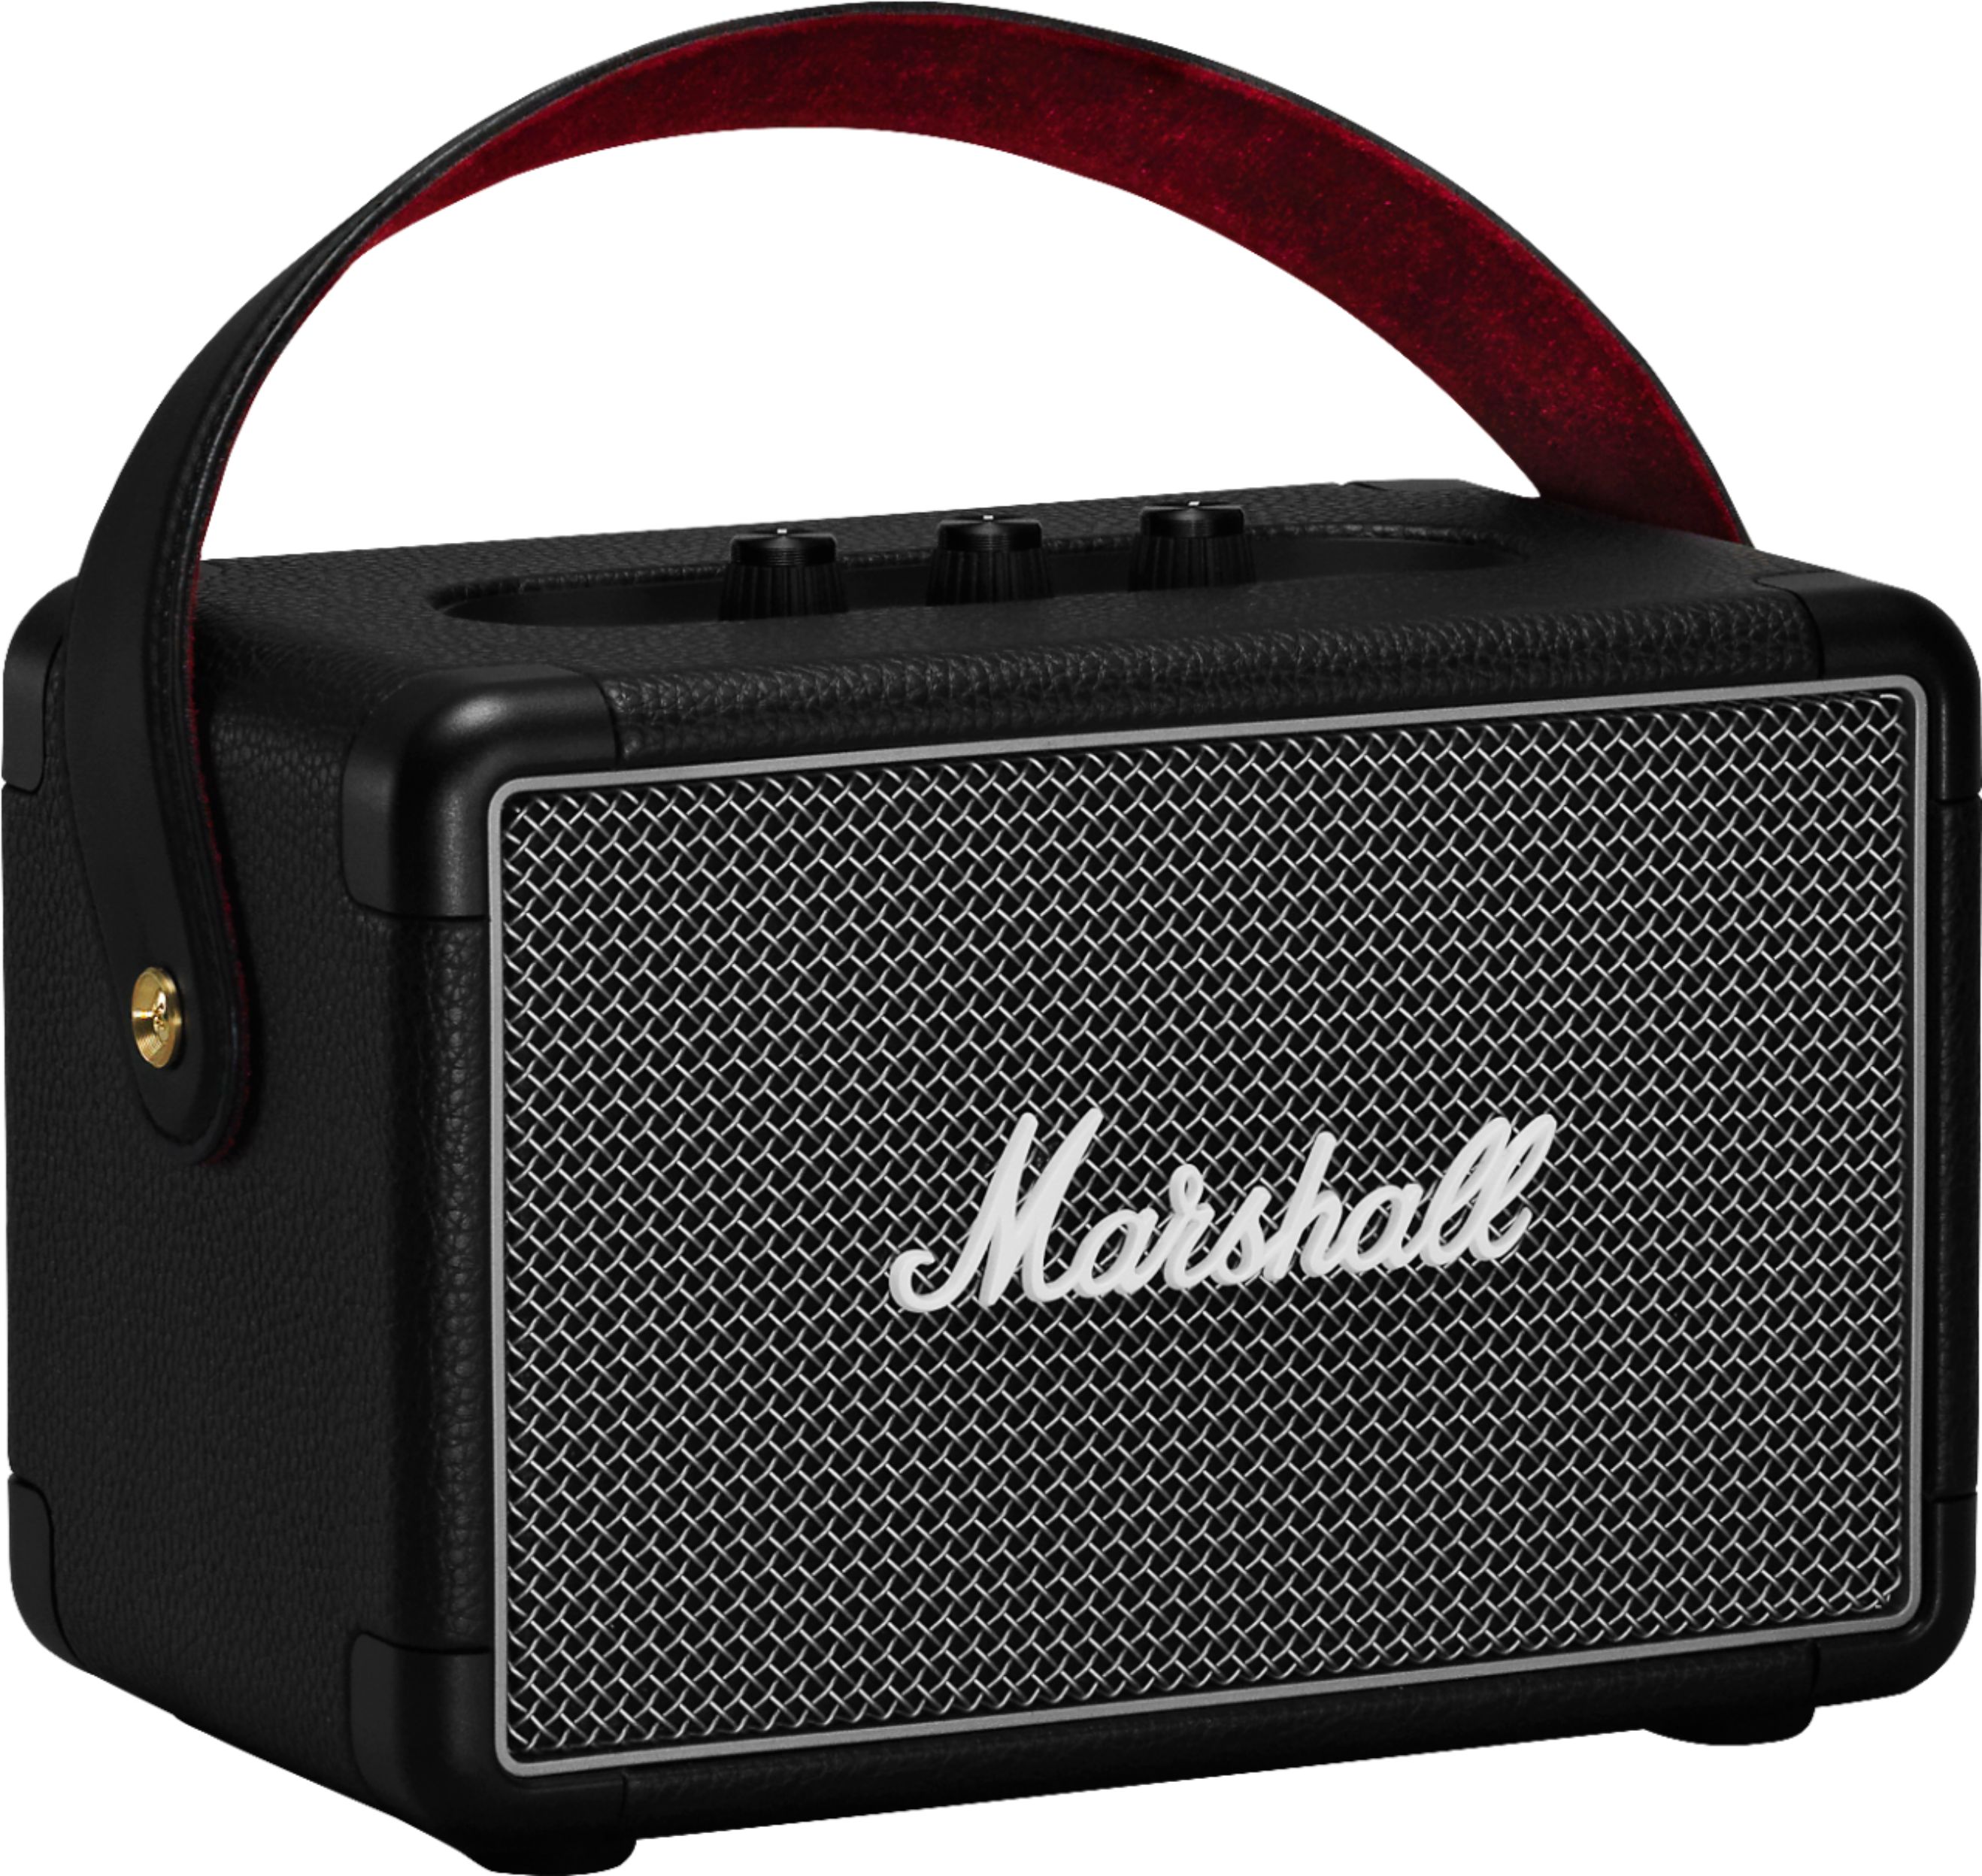 marshall retro bluetooth speaker